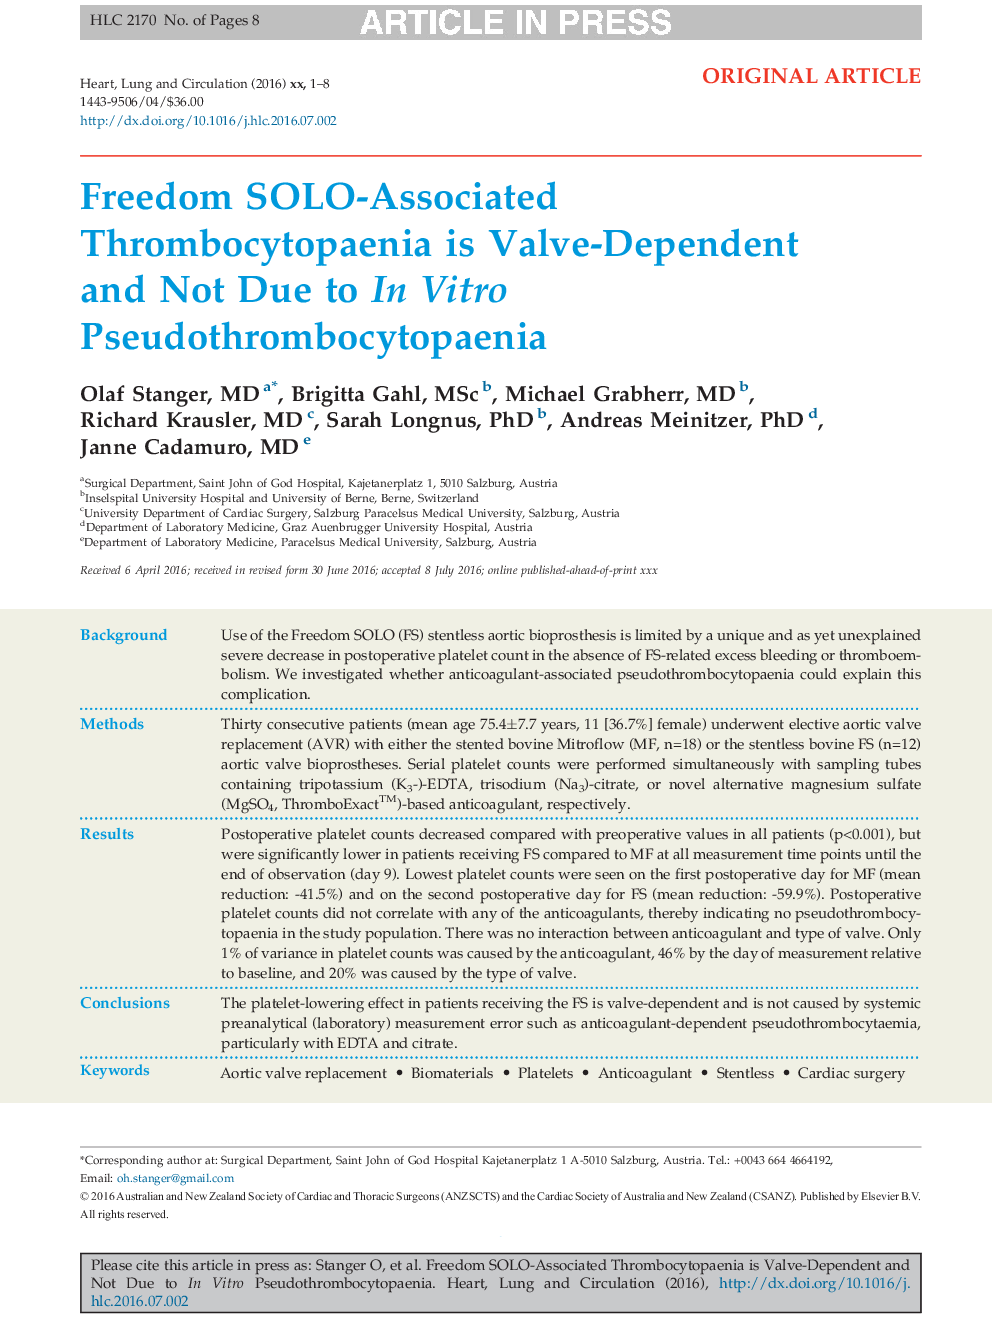 Freedom SOLO-Associated Thrombocytopaenia is Valve-Dependent and Not Due to In Vitro Pseudothrombocytopaenia